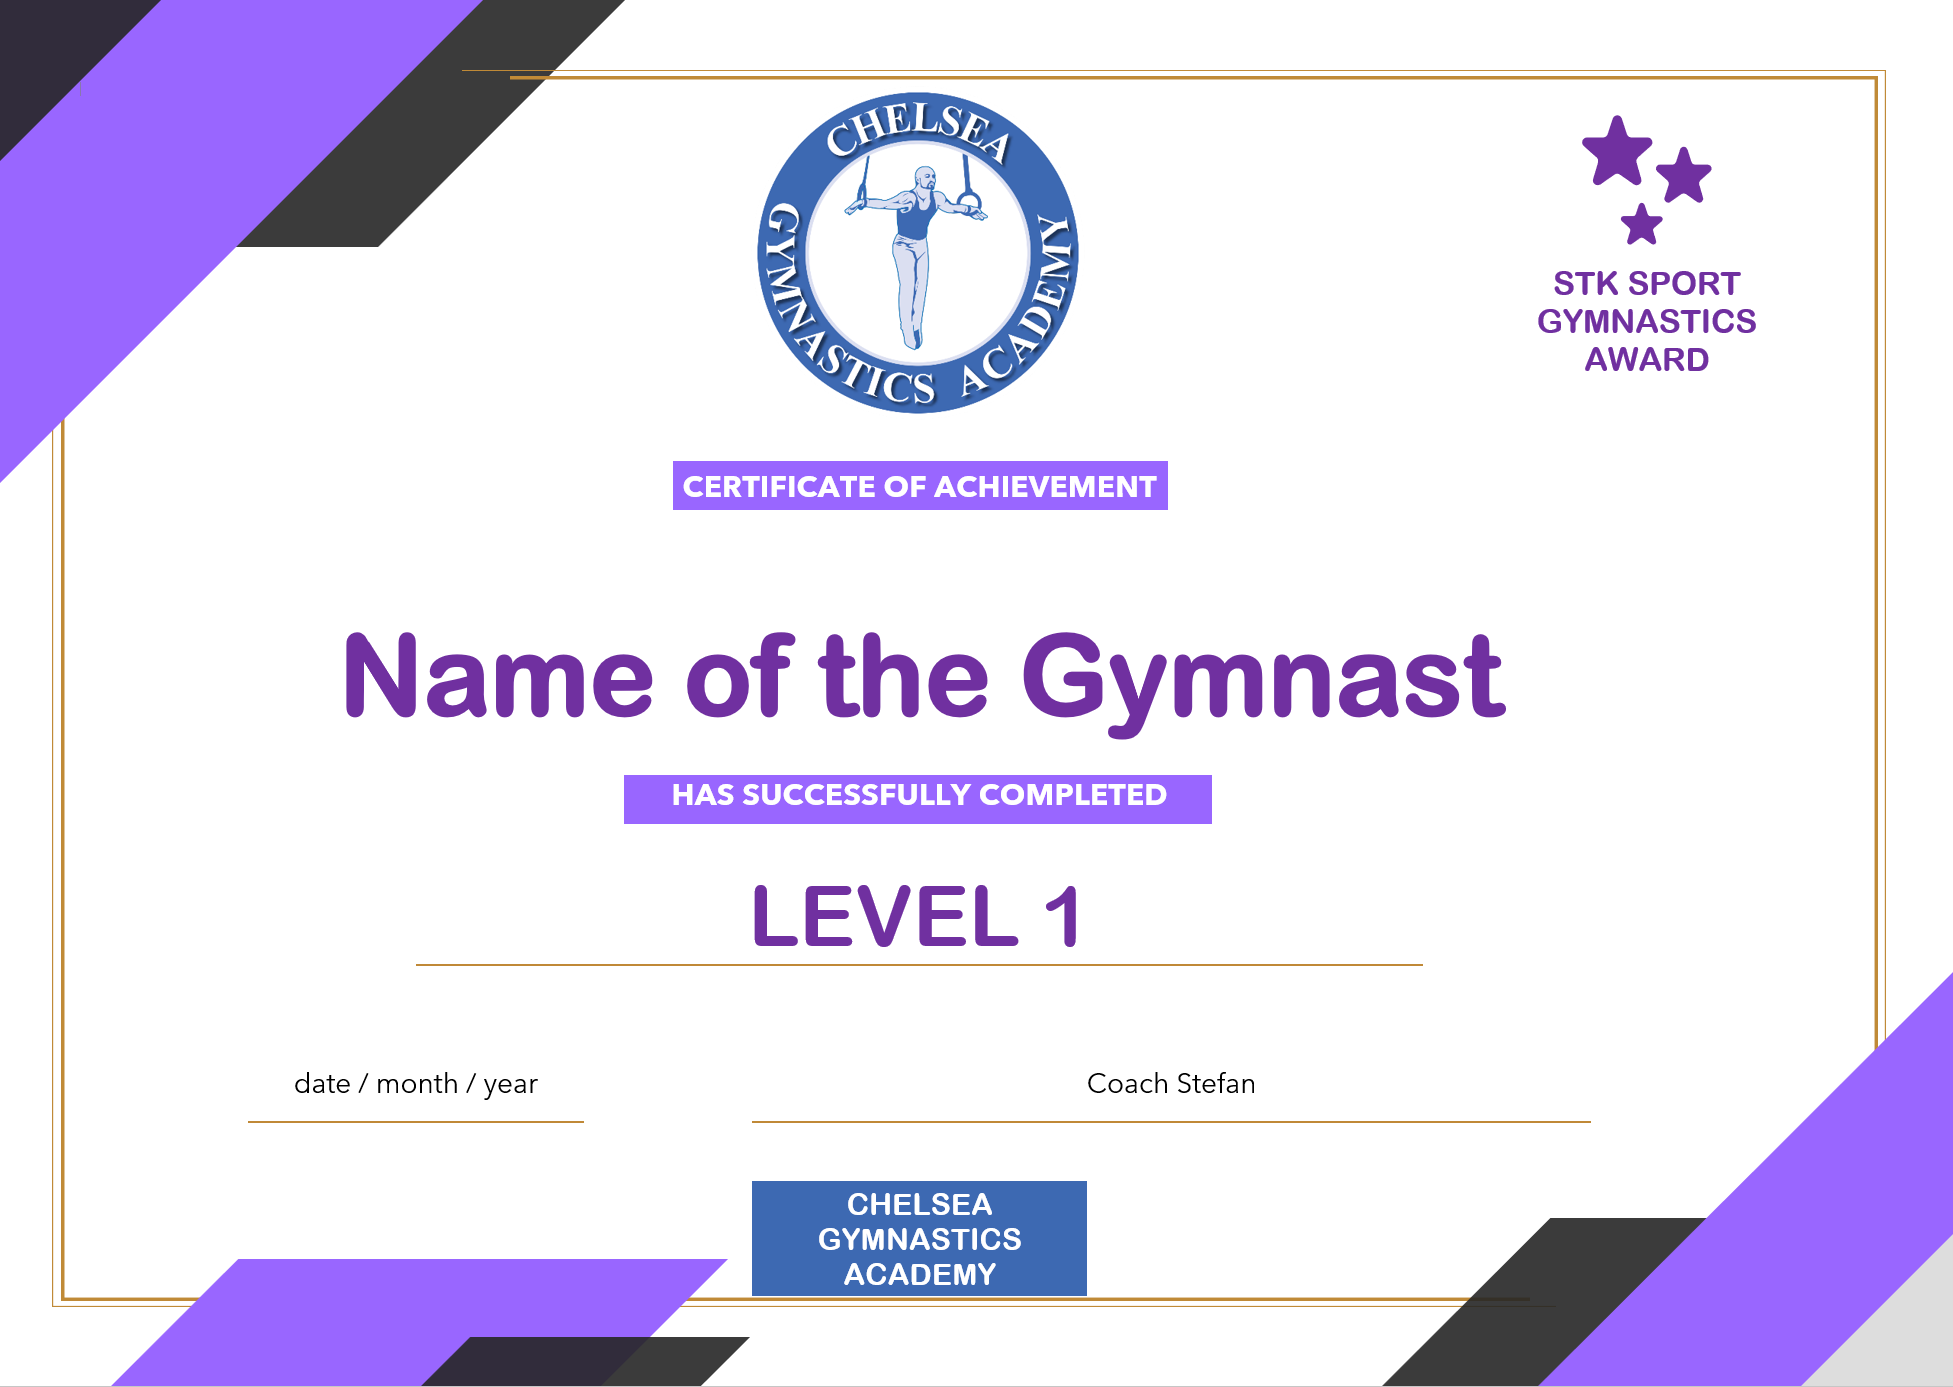 Gymnastics Certificate Level 1 - STK SPORT Gymnastics Awards (Chelsea Gymnastics)